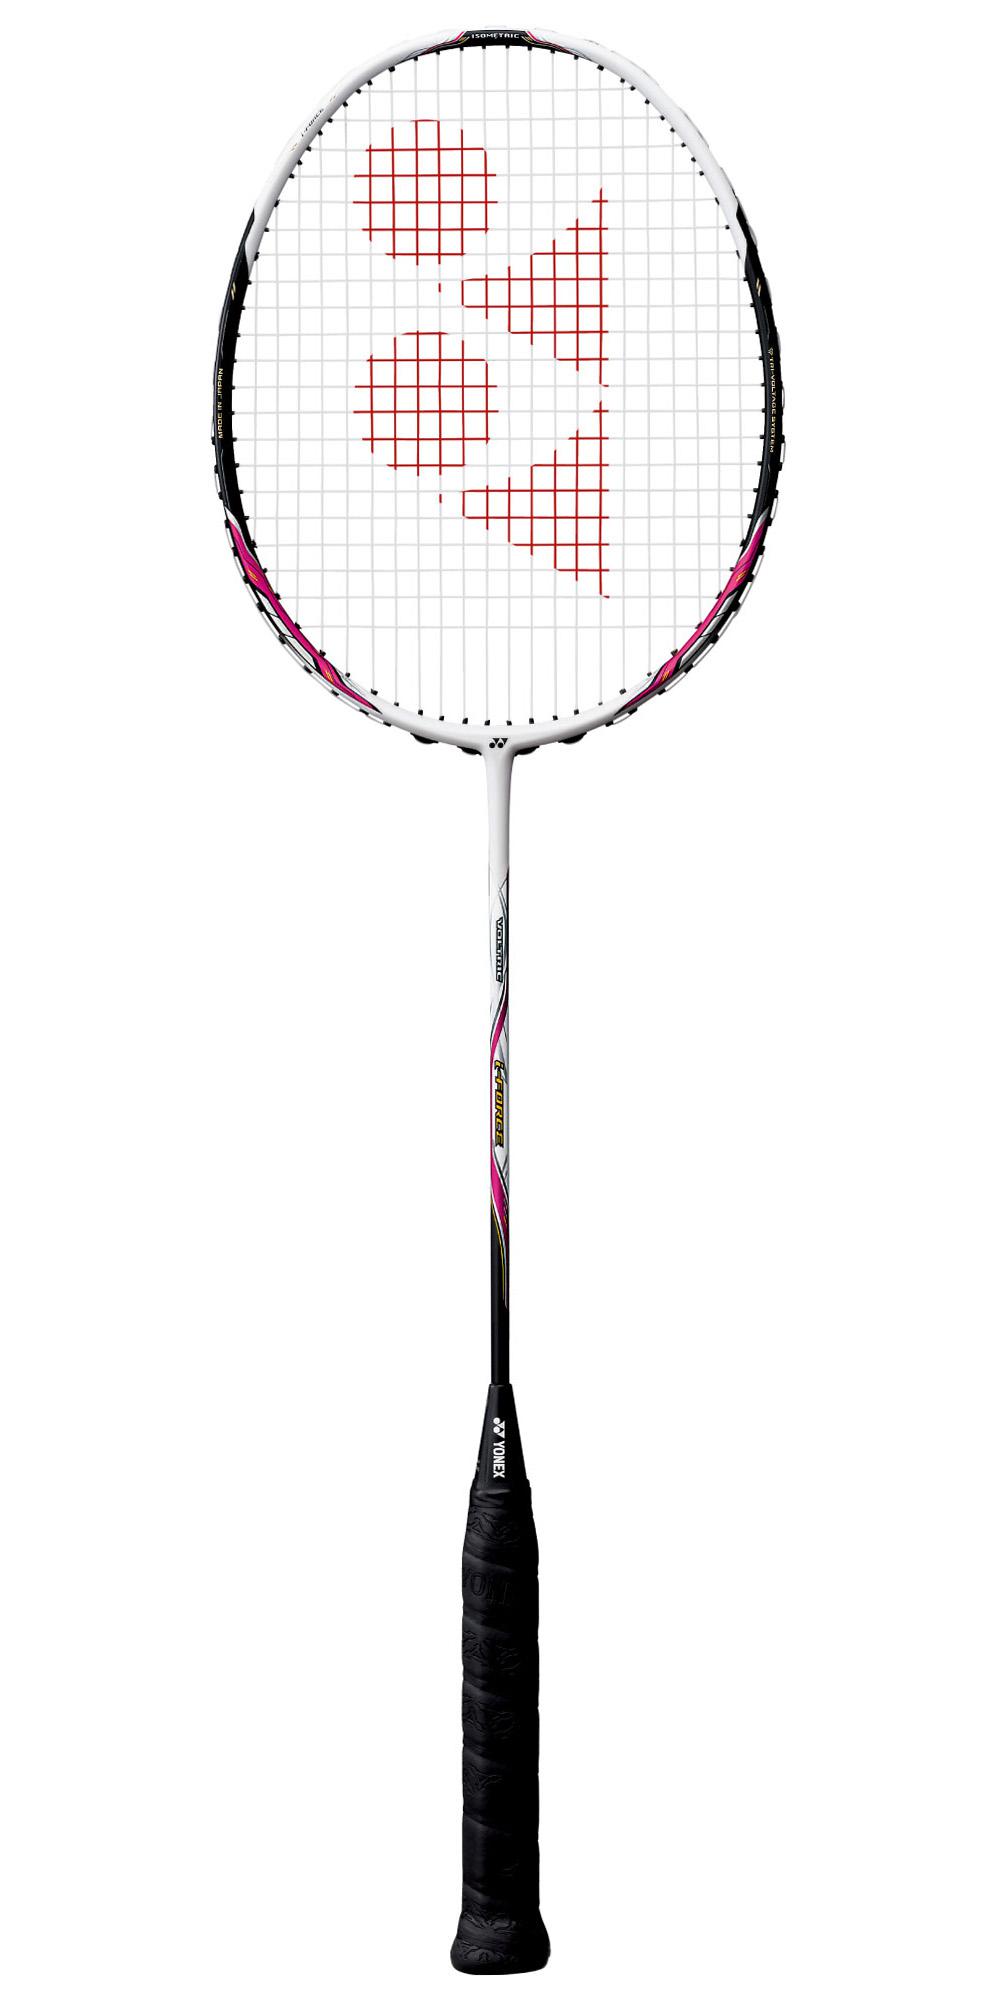 Yonex Voltric I-Force Badminton Racket [Frame Only]